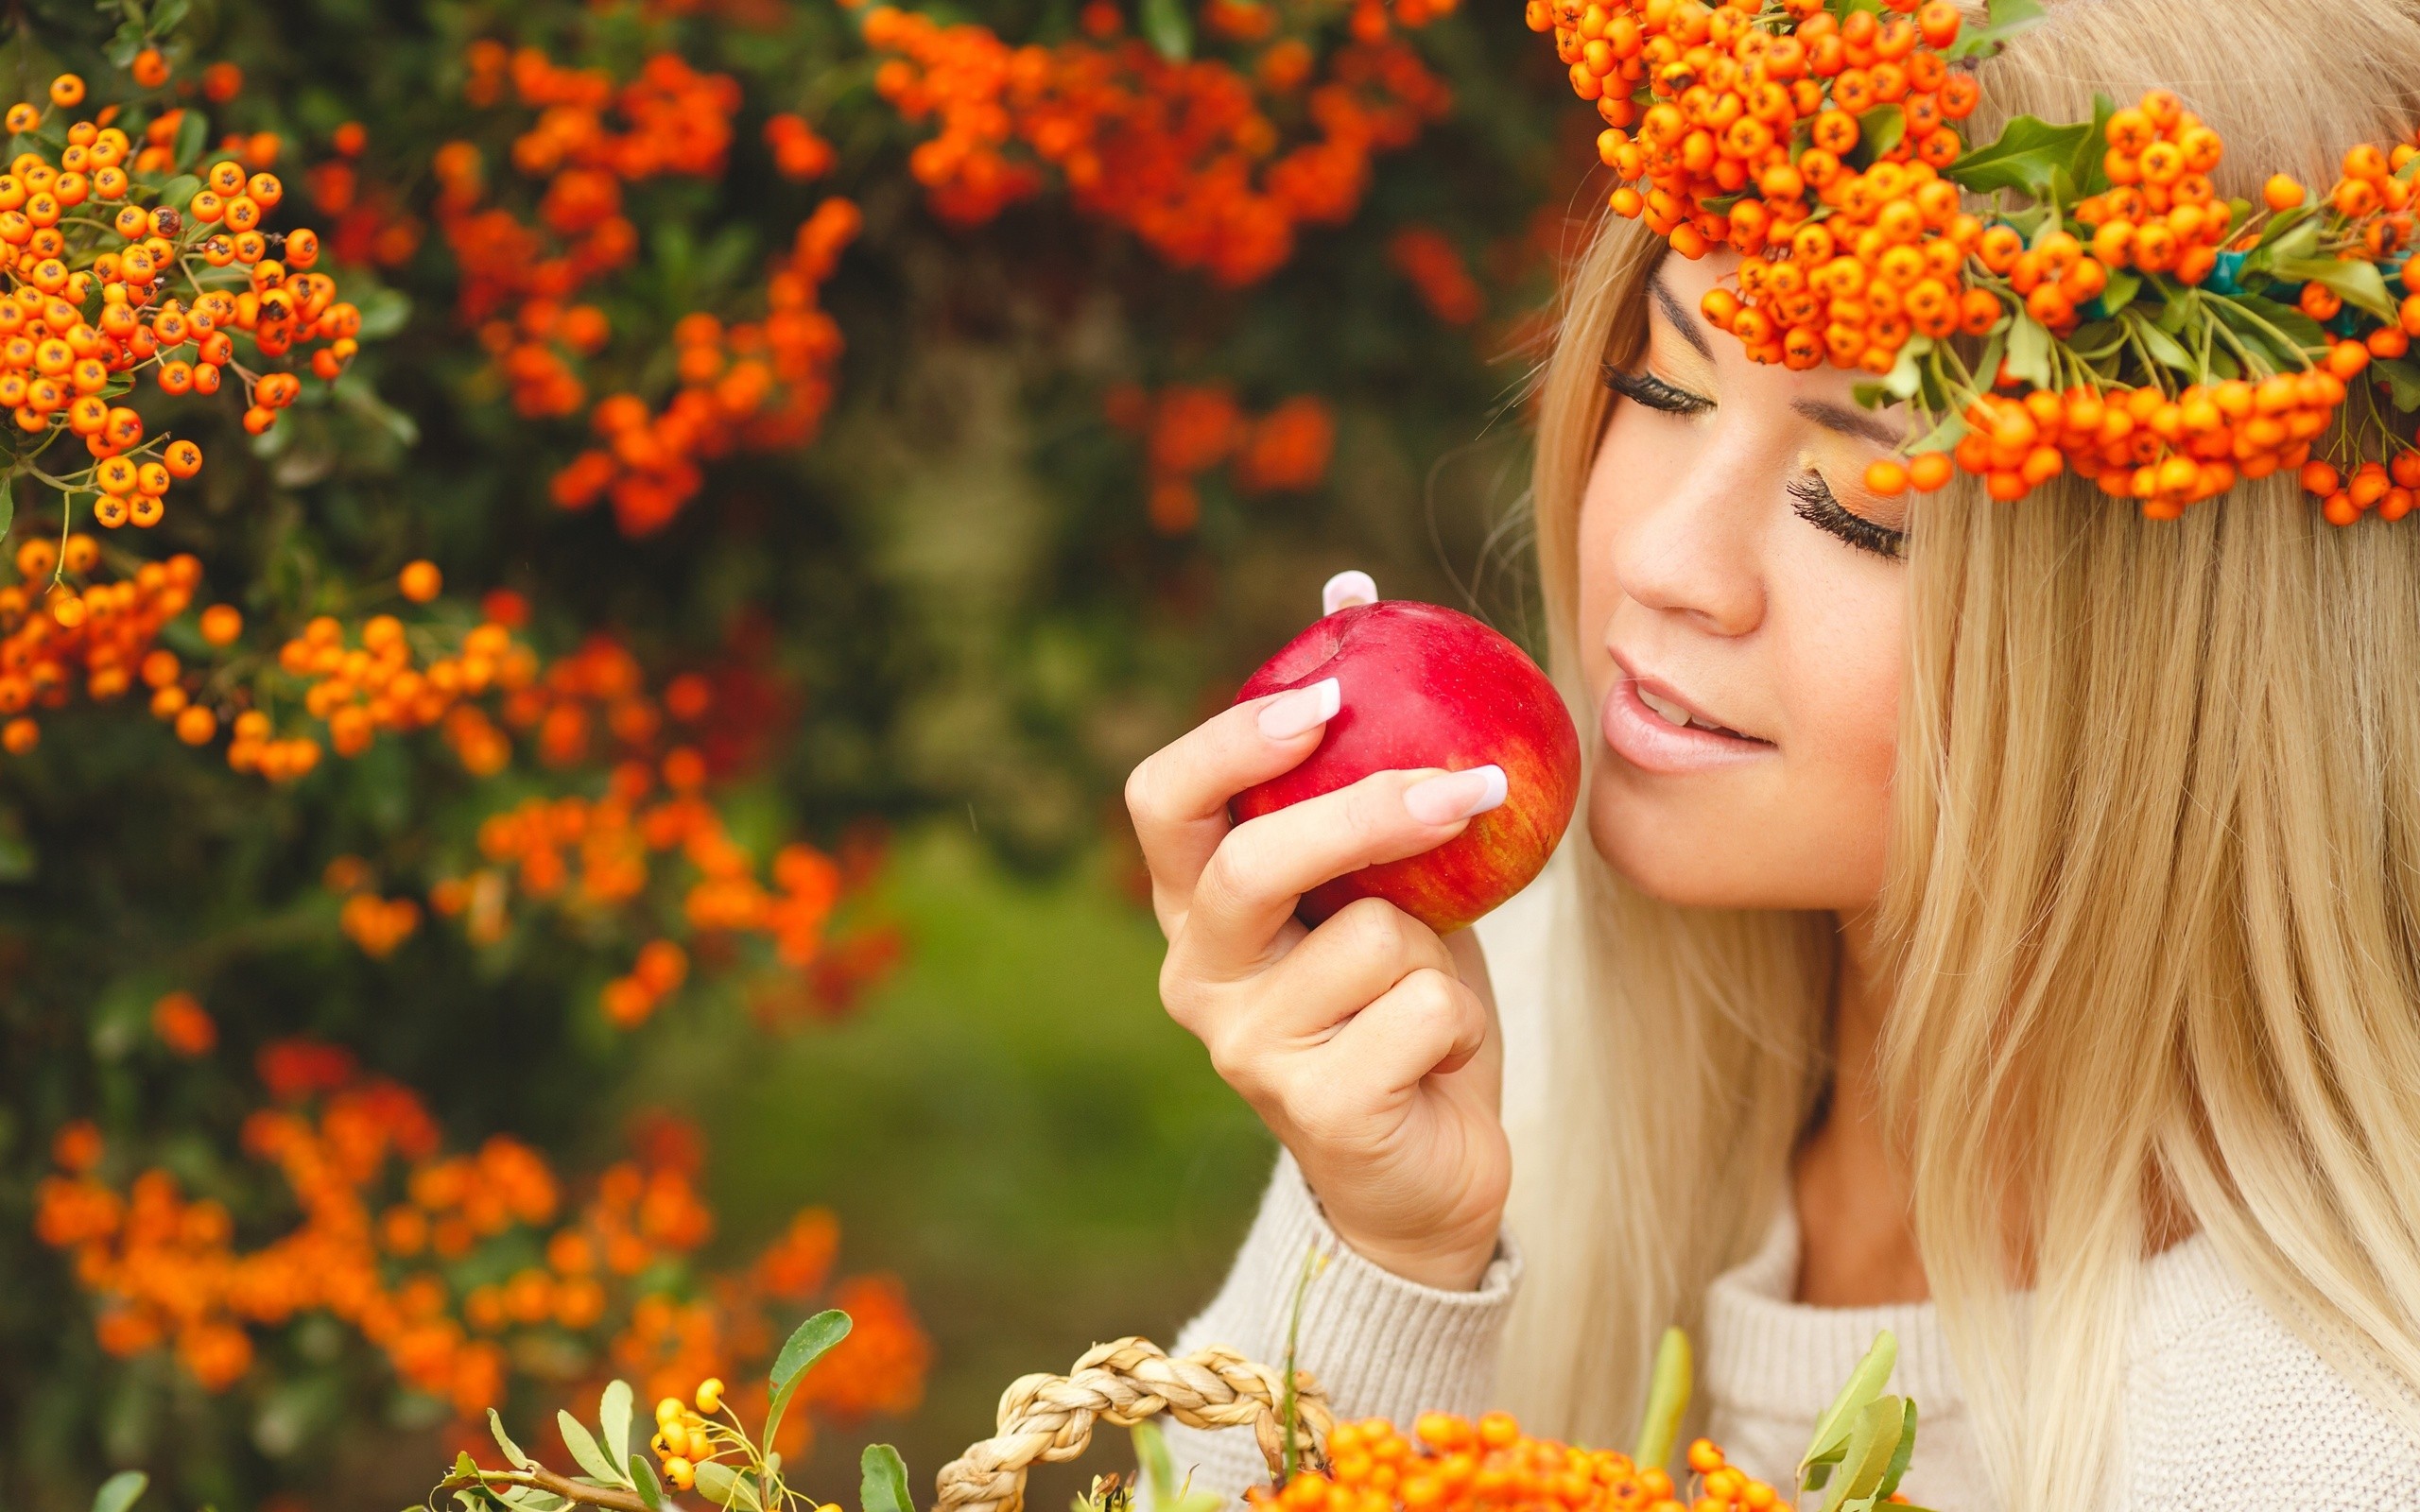 People 2560x1600 women model blonde closed eyes smiling women outdoors apples nature wreaths food fruit